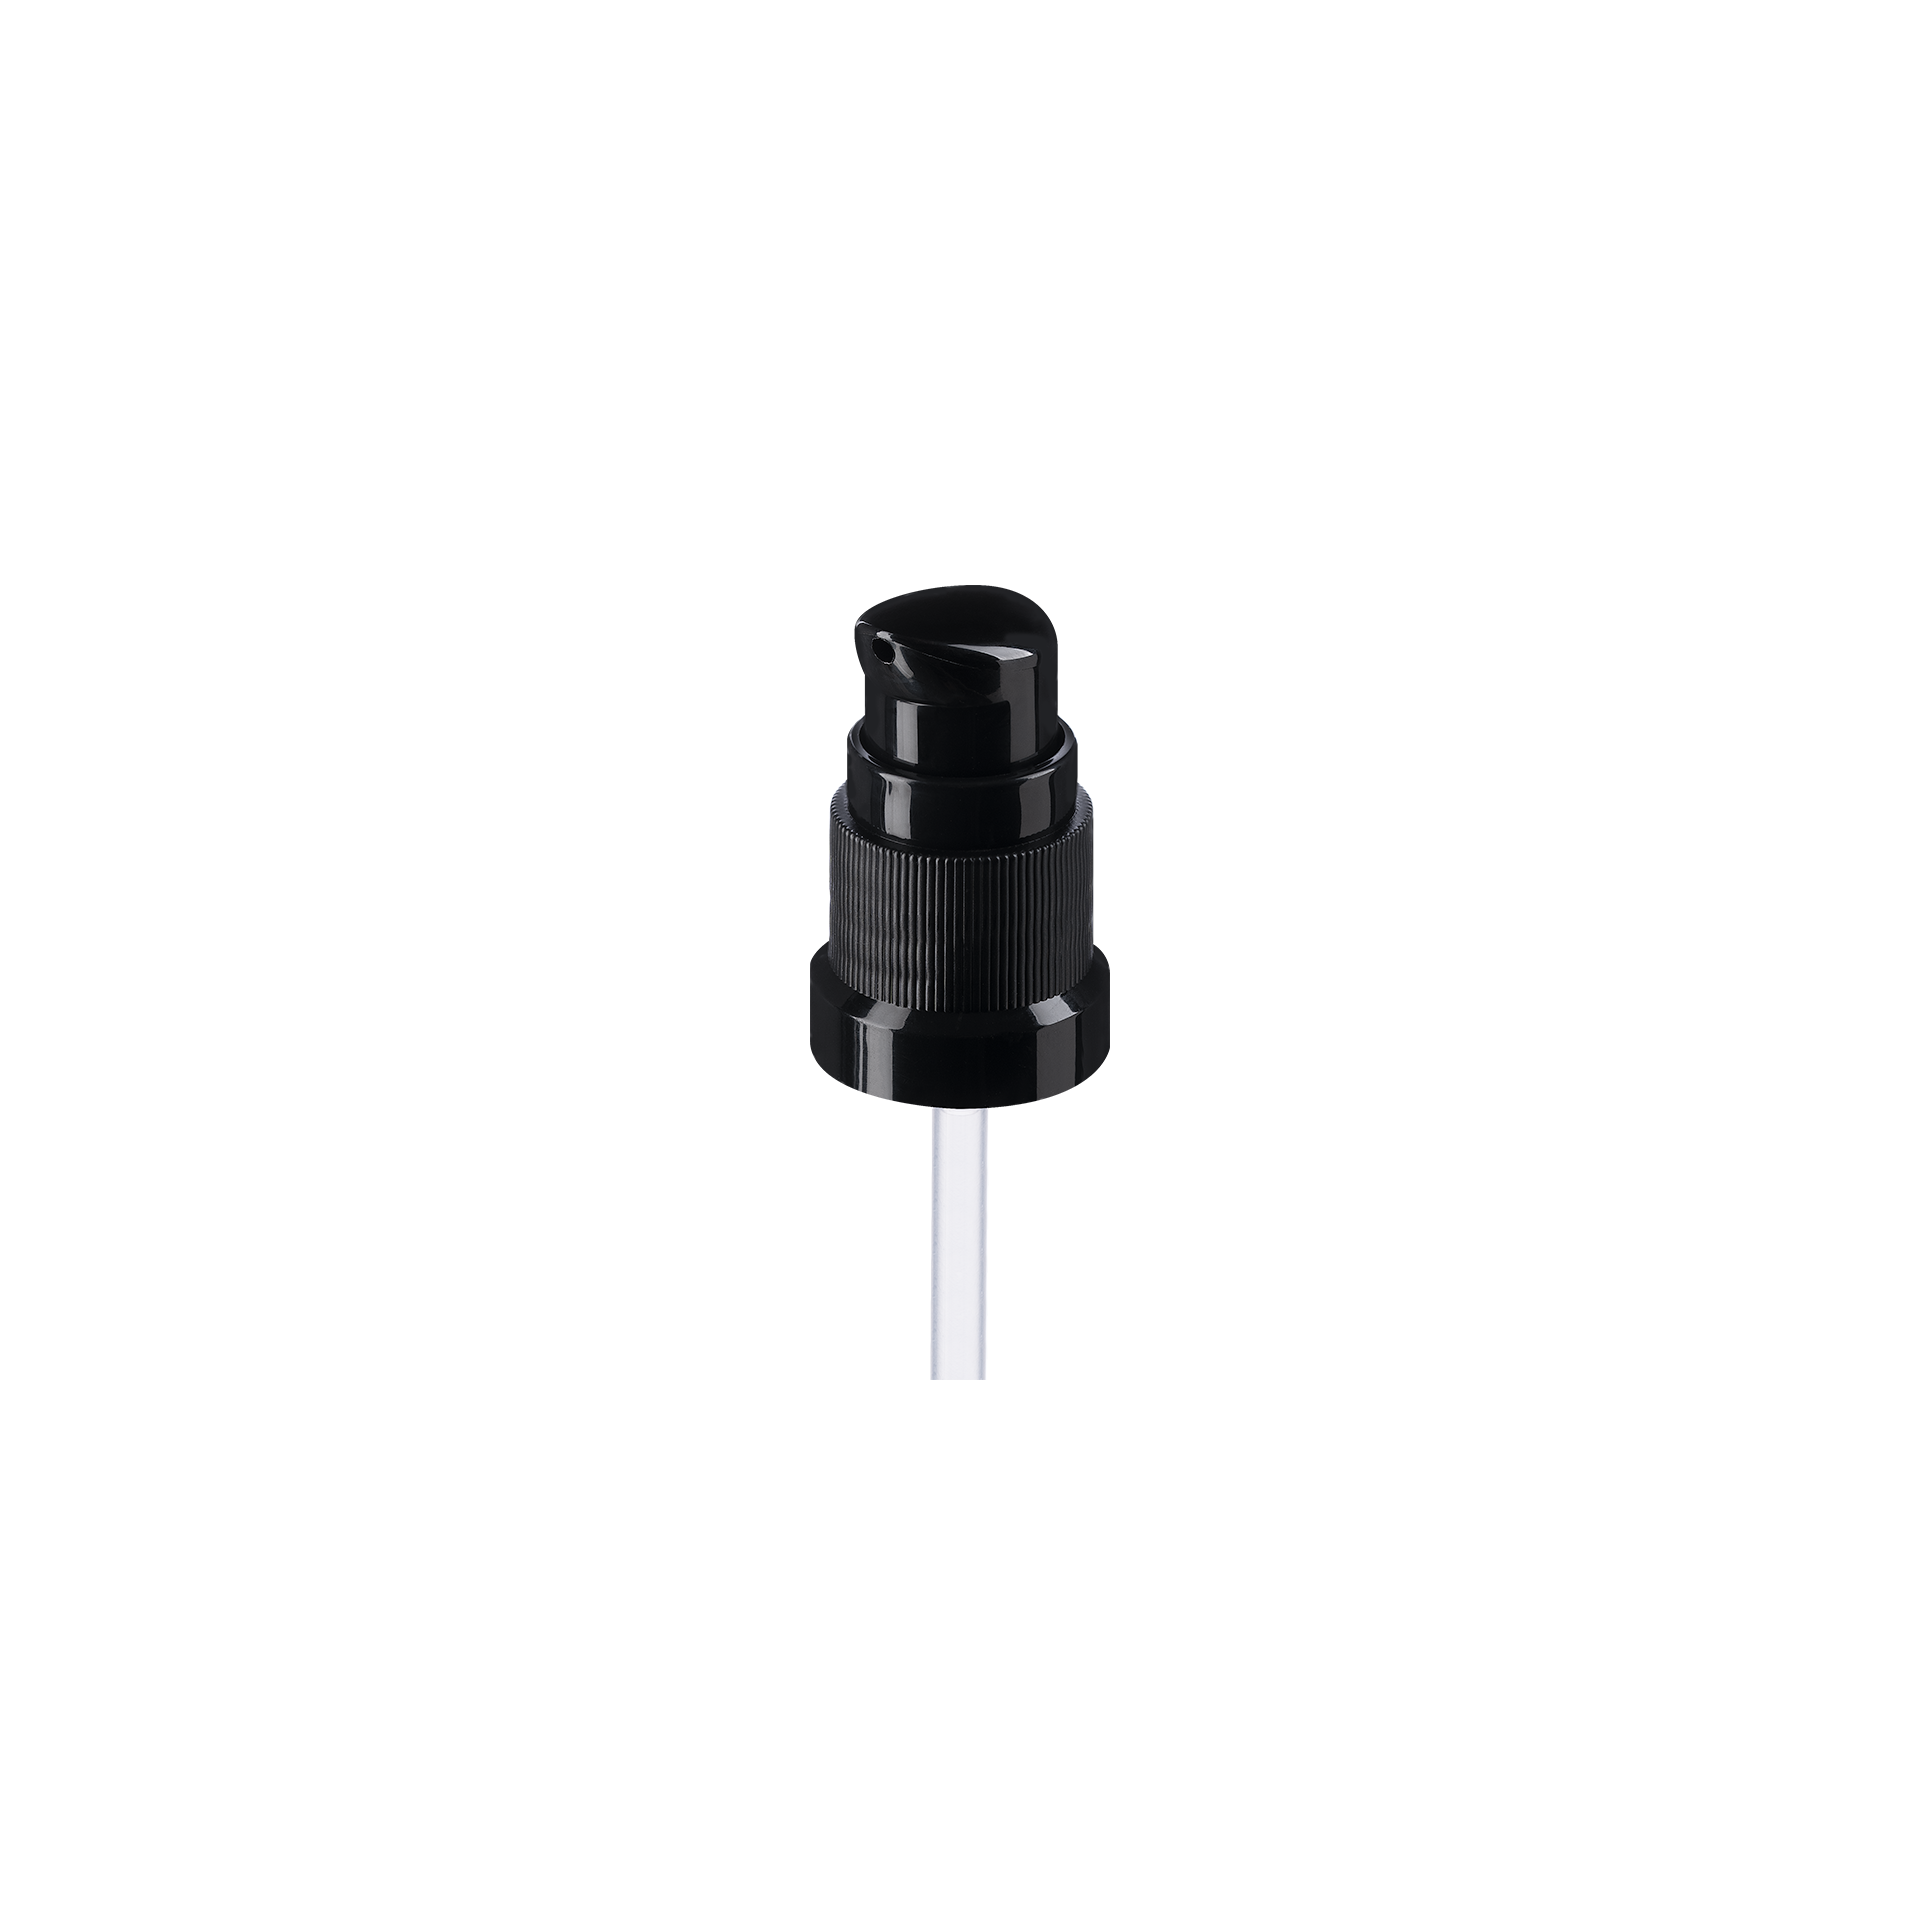 Lotion pump Metropolitan DIN18, PP, black, dose 0.15ml, black security clip (Ginger 30)